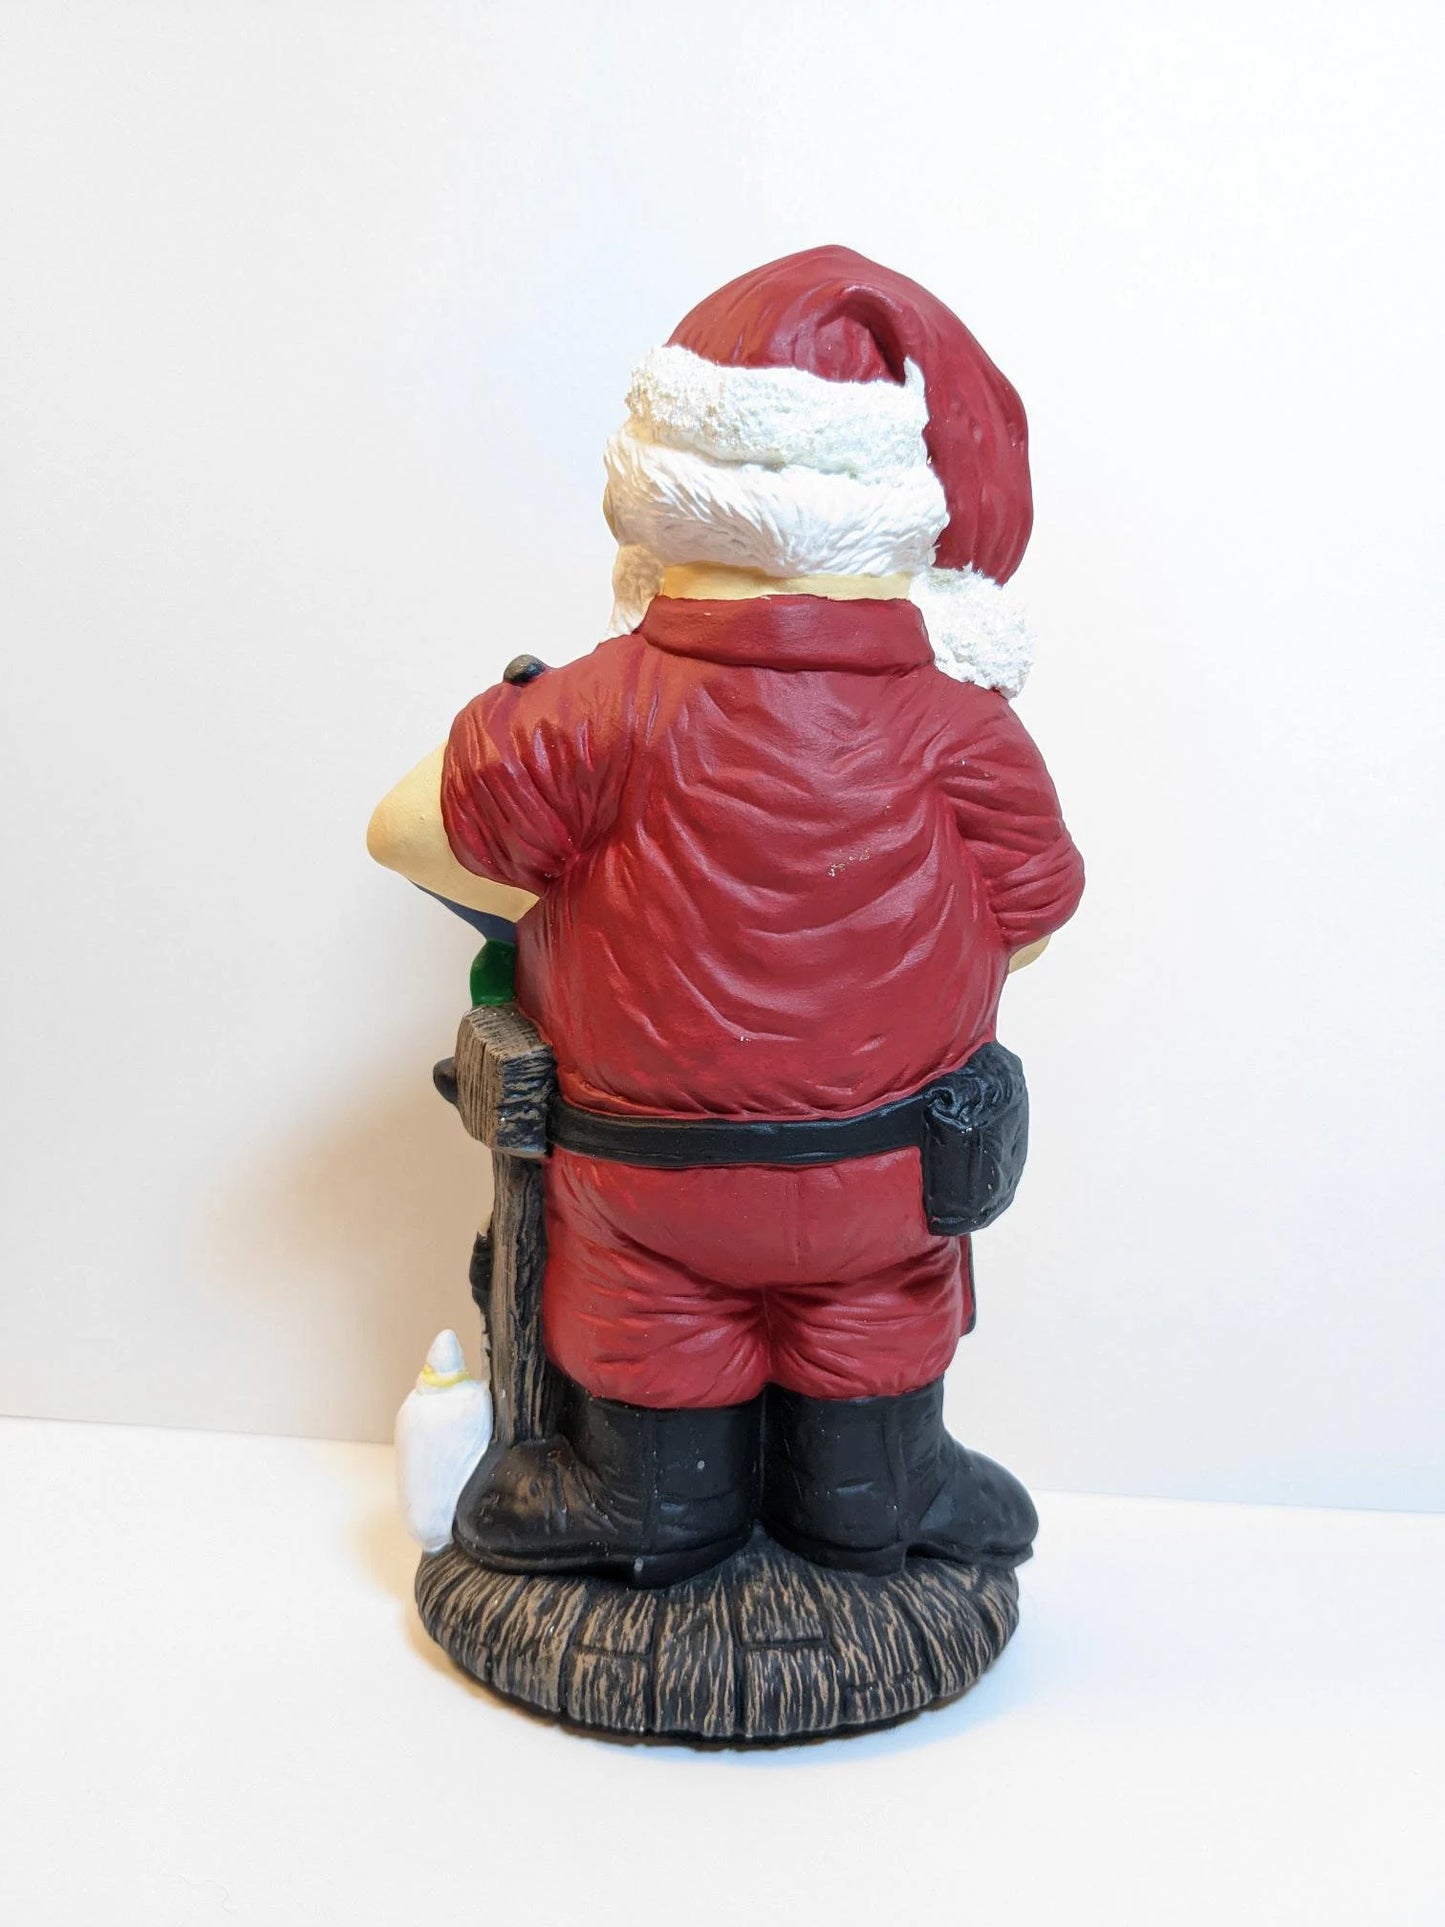 Woodworking Santa Claus Figurine